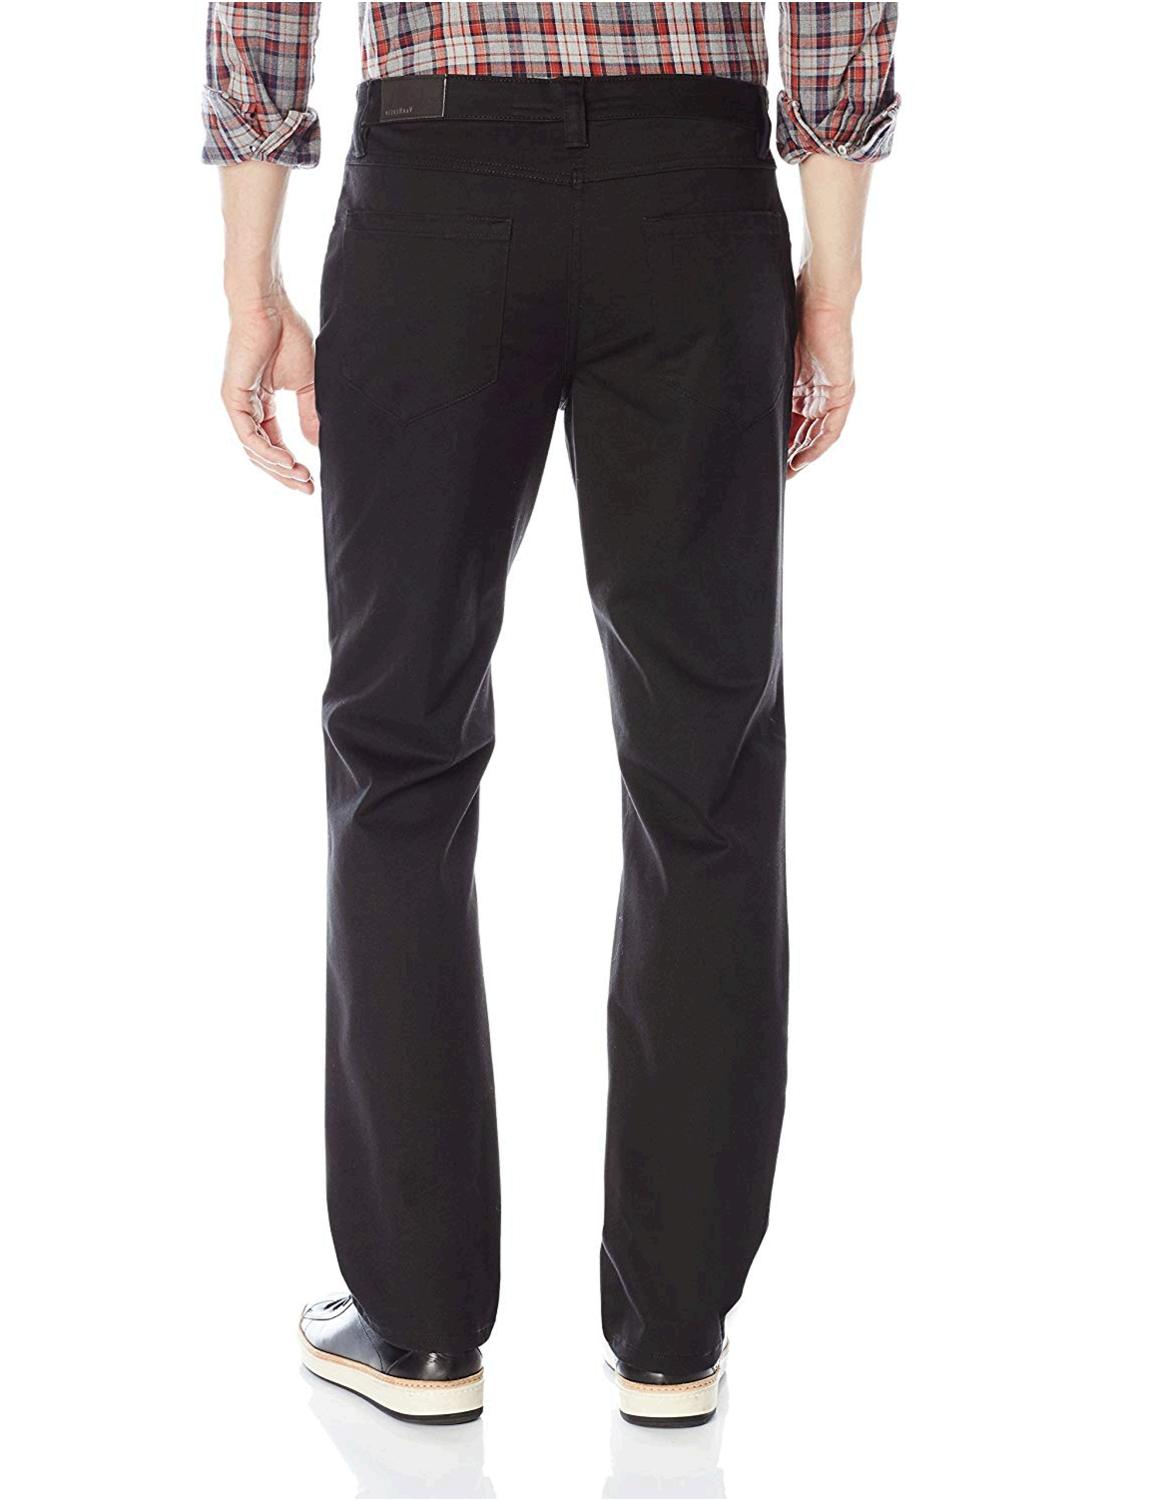 Van Heusen Men's Flex Slim Fit 5 Pocket Pant, Black, 42W, Black, Size